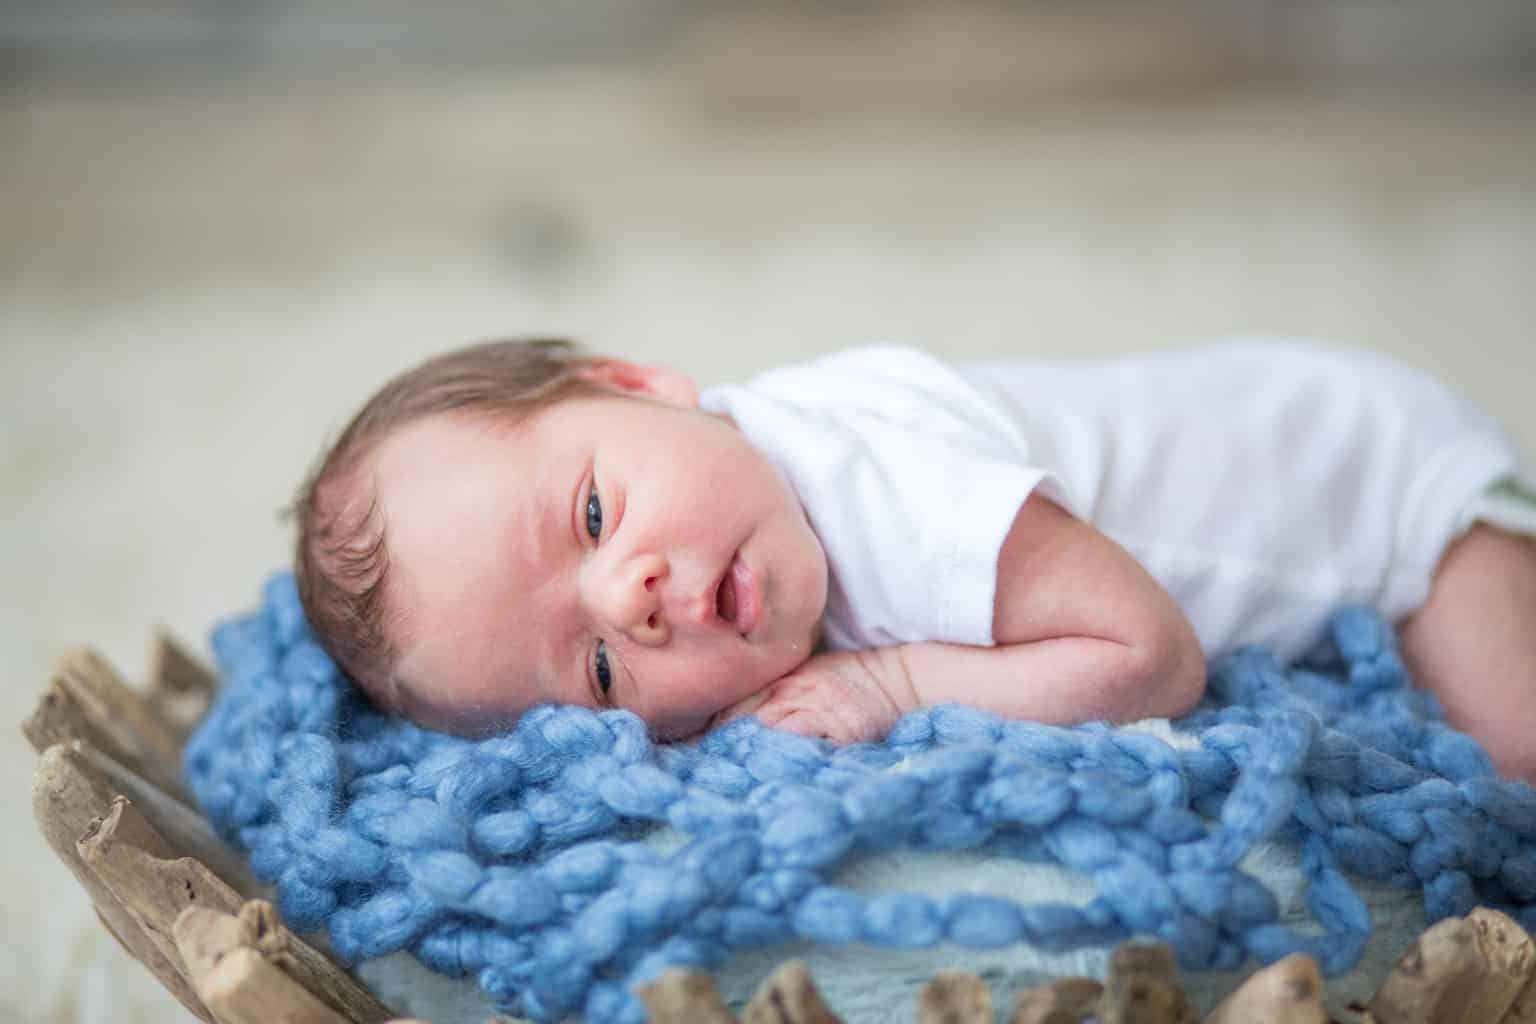 newborn baby on decorative blue blanket